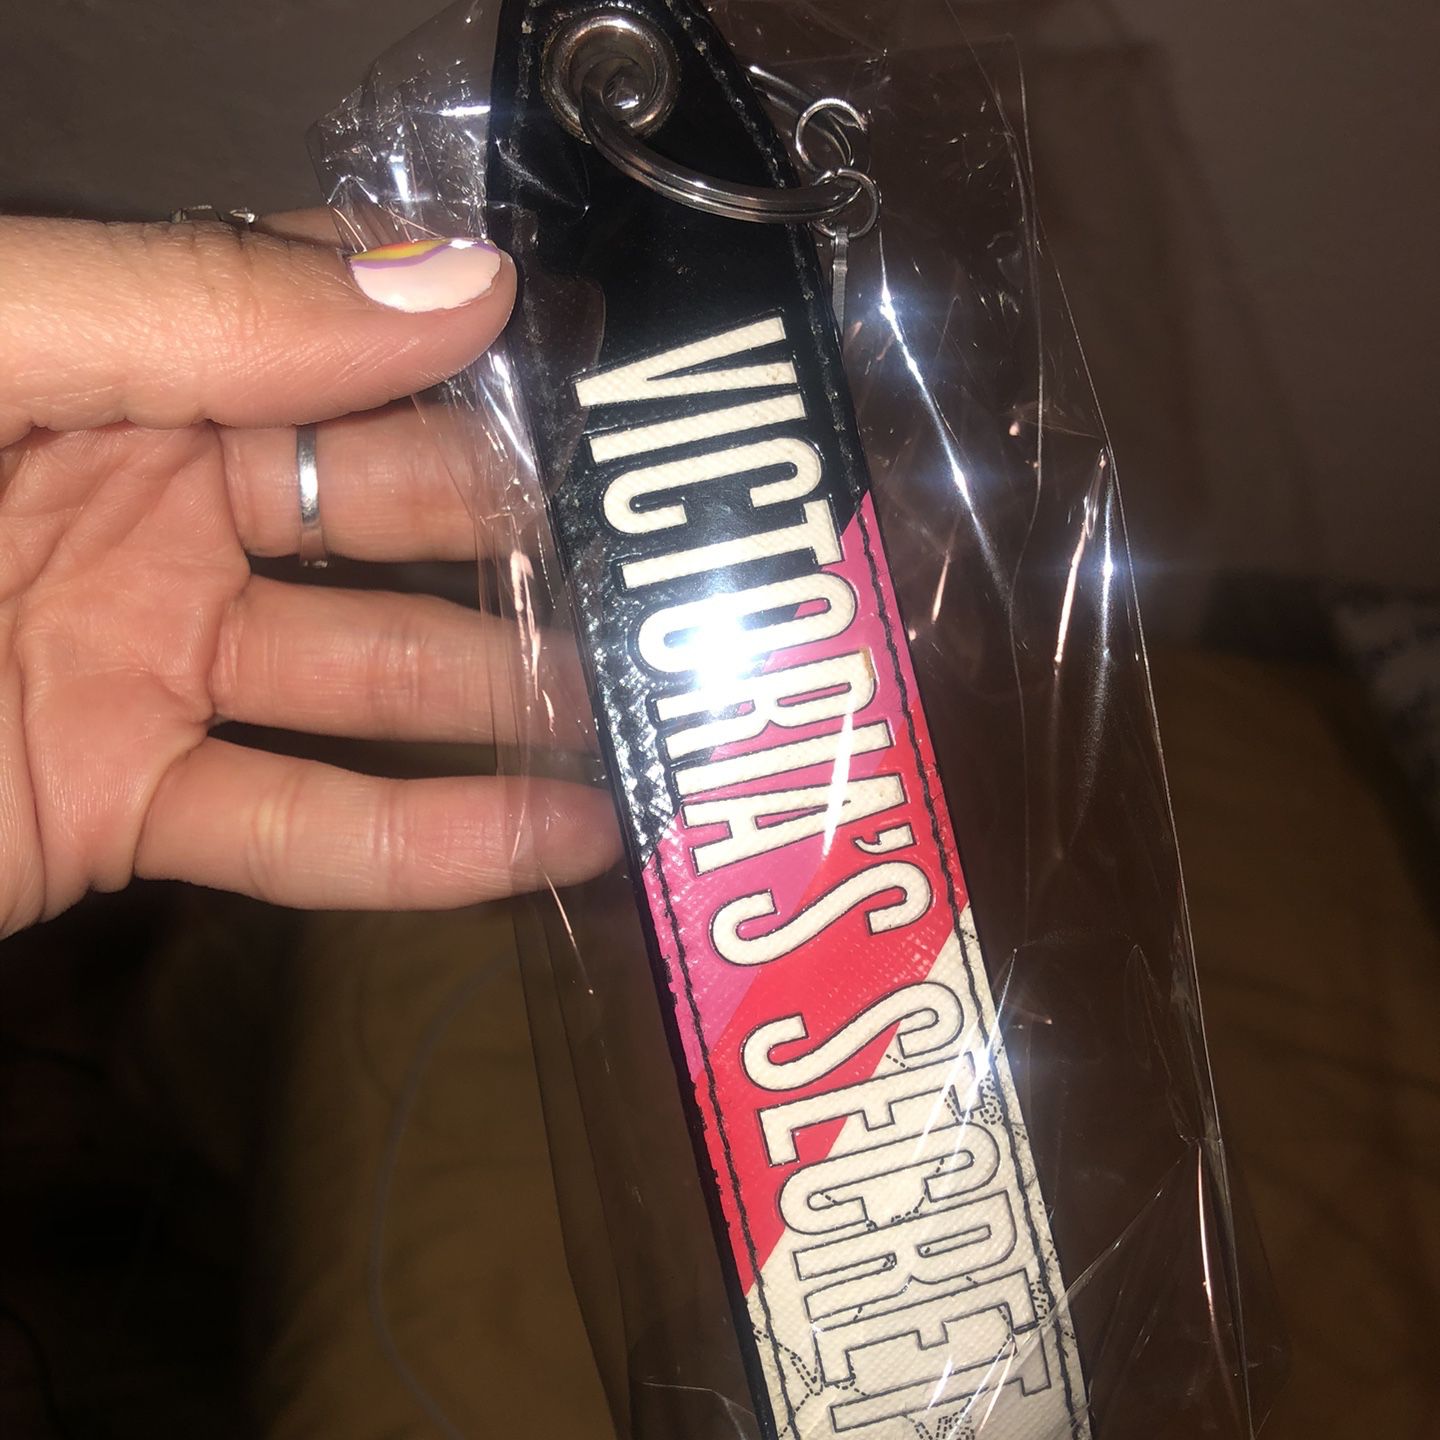 Victoria's Secret Rhinestone Wristlet Strap Keychain for Sale in Vallejo,  CA - OfferUp